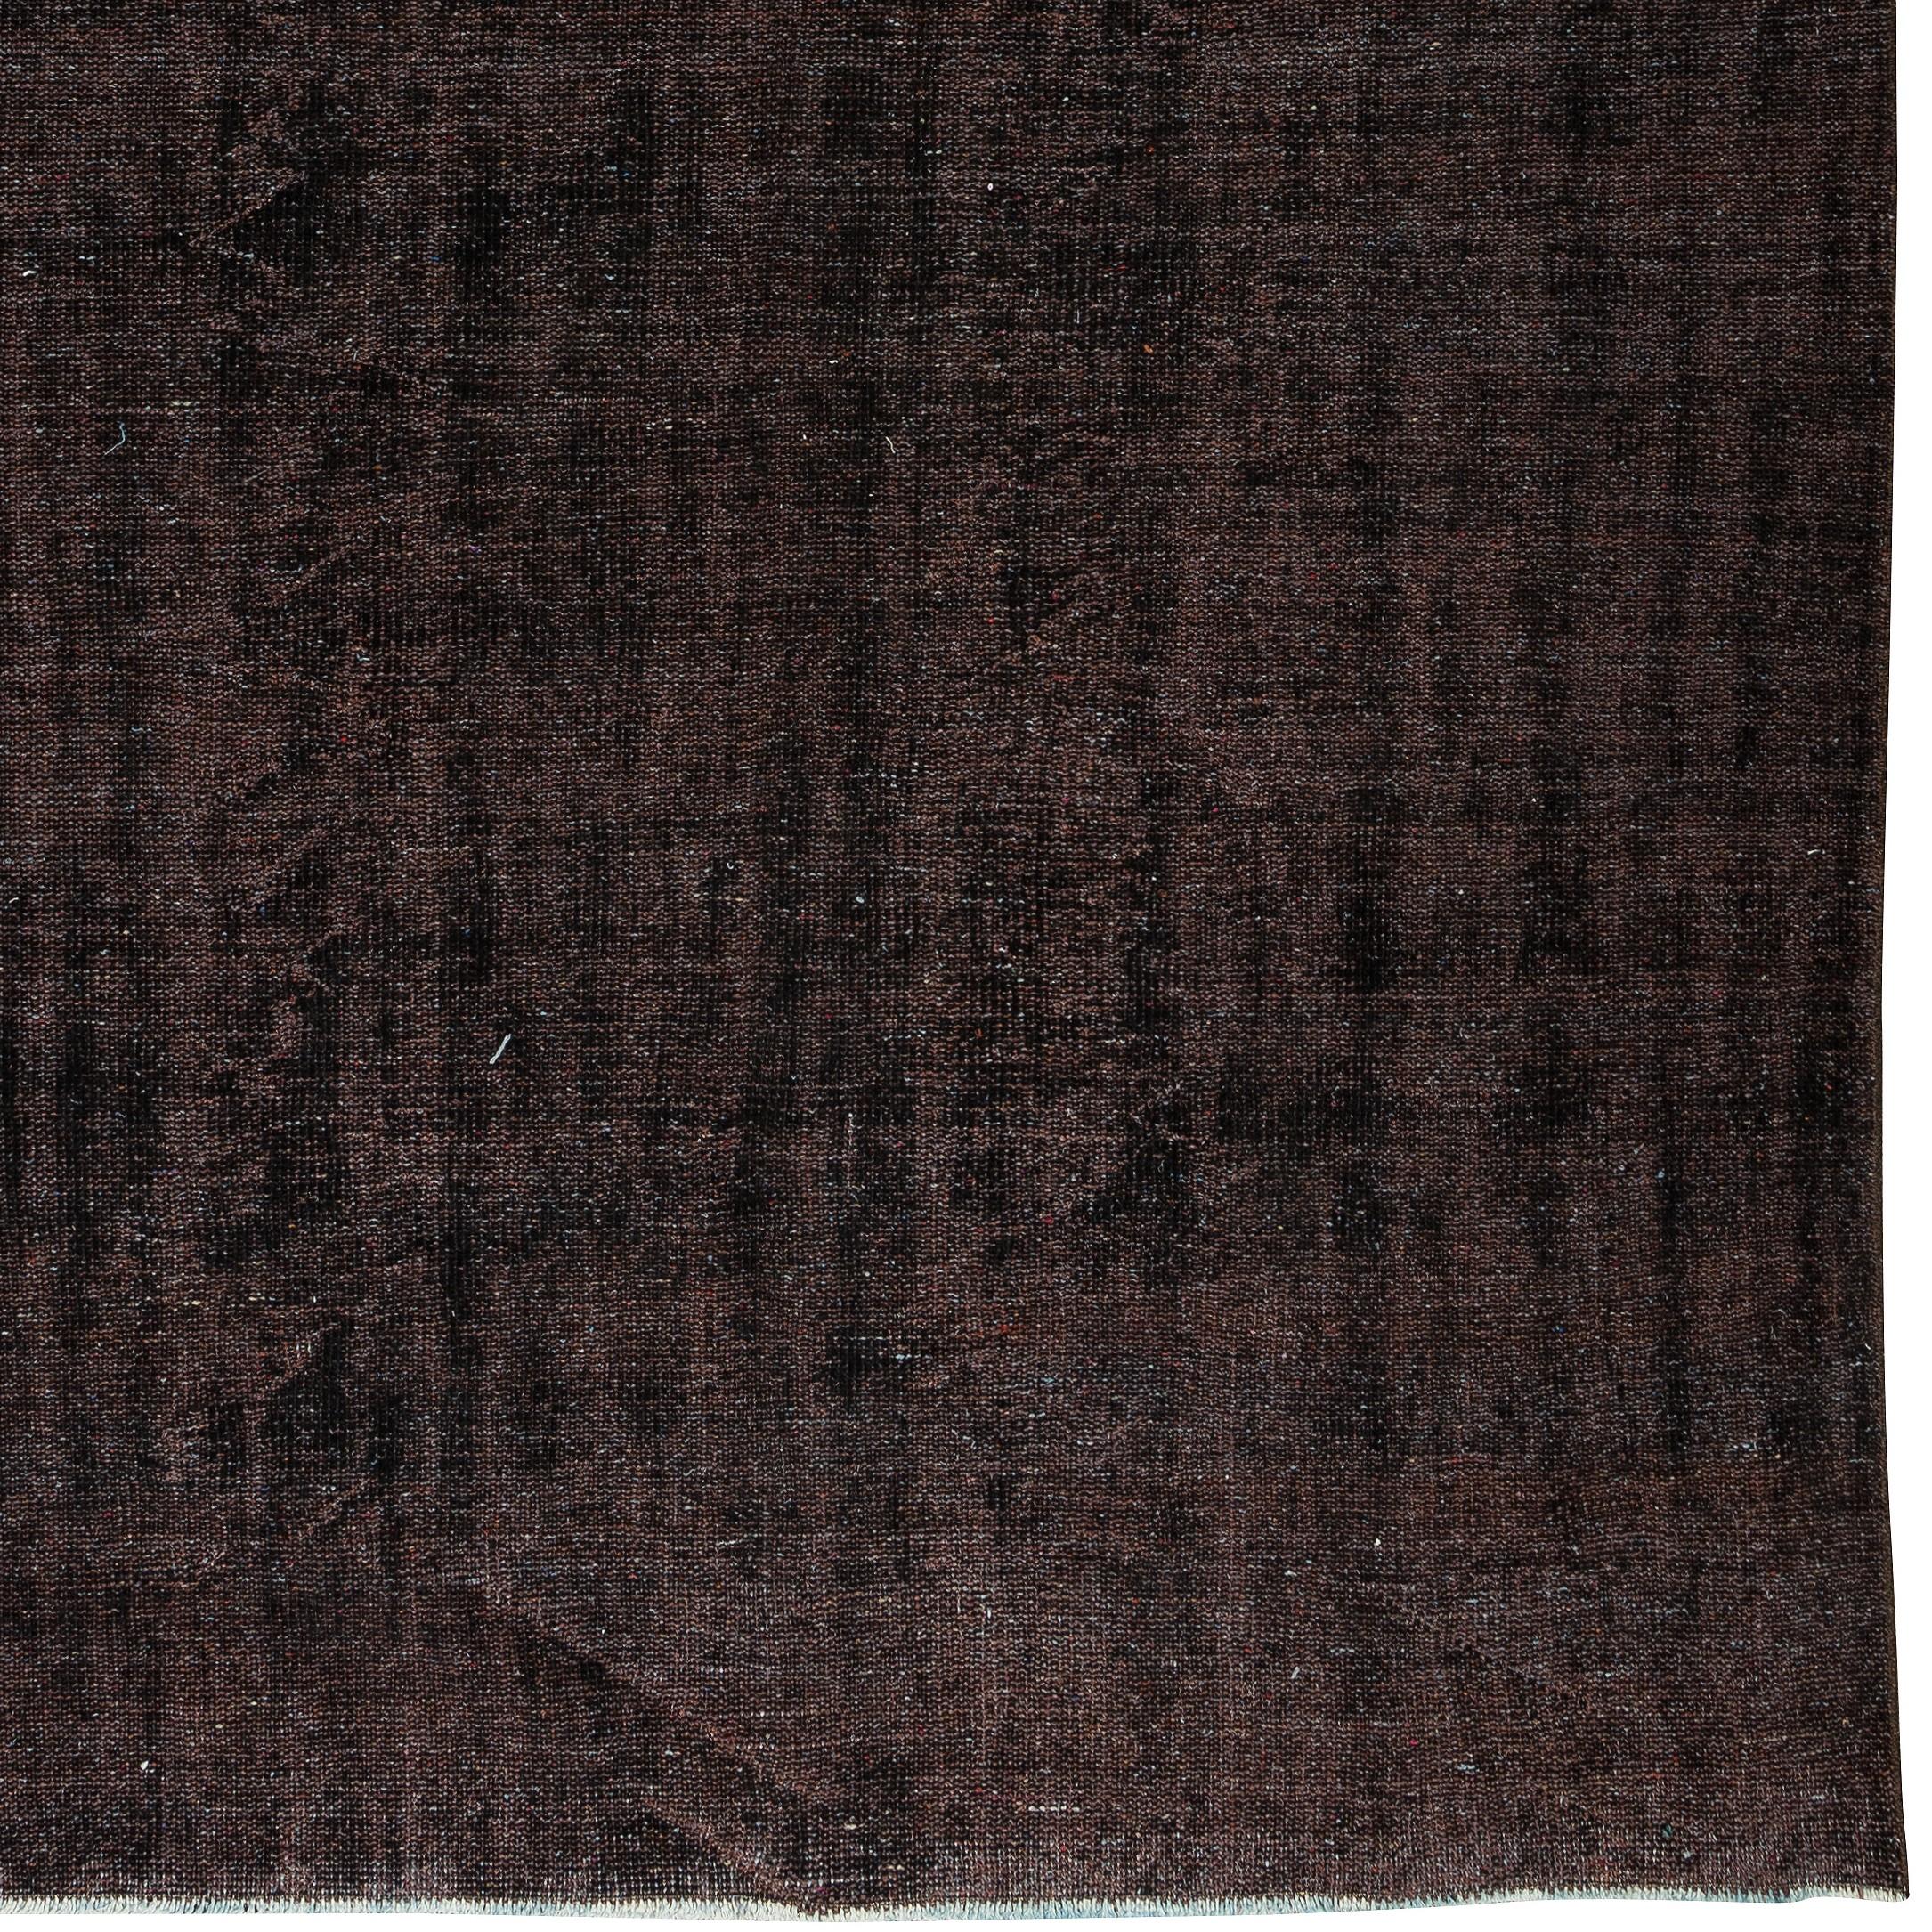 5.8x10 Ft Handmade Vintage Turkish Wool Rug in Solid Brown 4 Modern Interiors For Sale 1